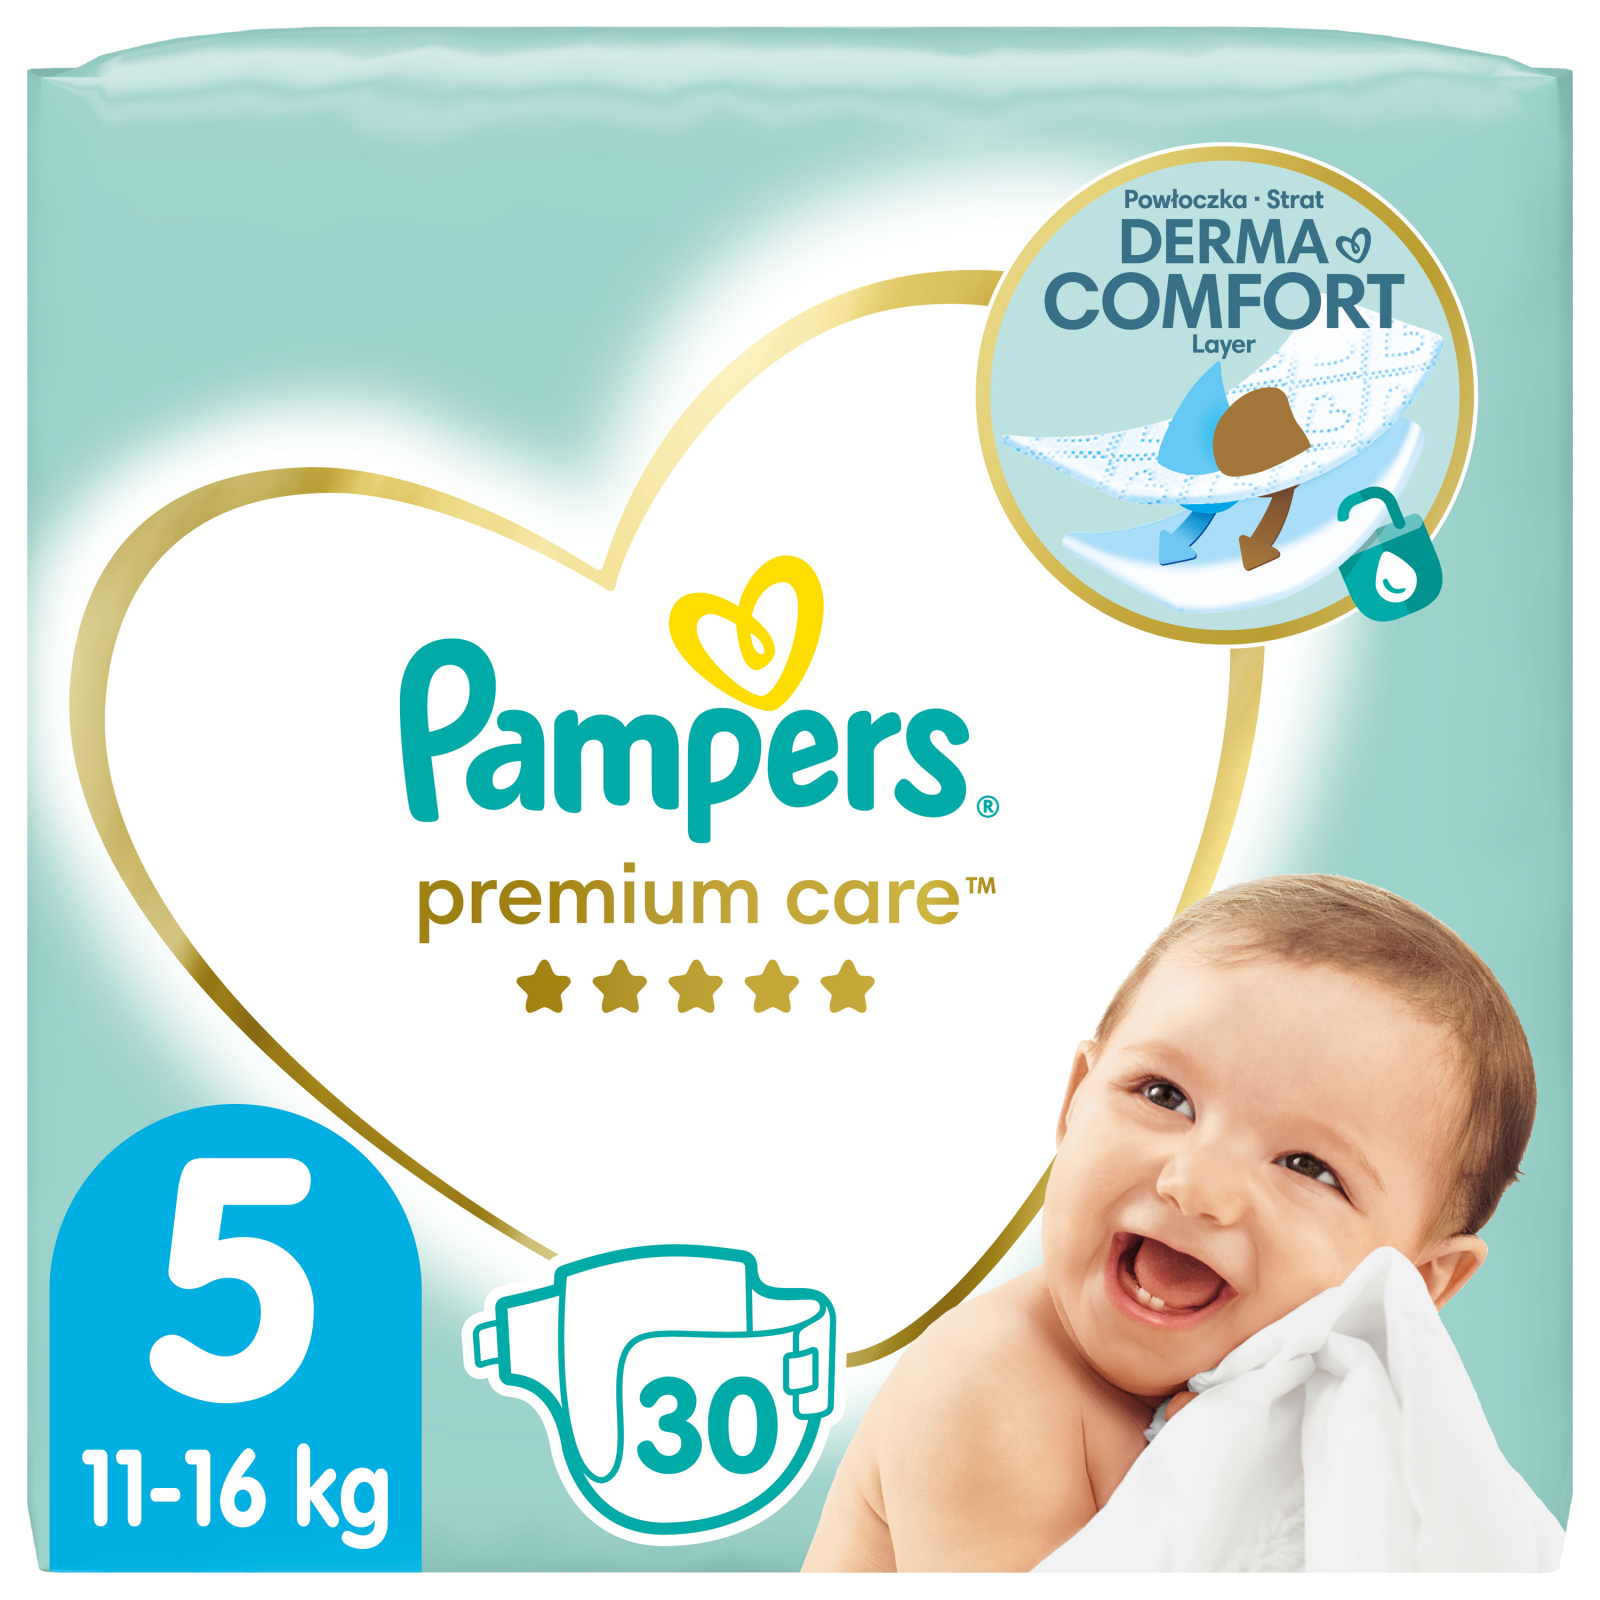 Подгузники Pampers Premium Care Junior Размер 5 (11-16 кг), 136 шт (8001090959690)